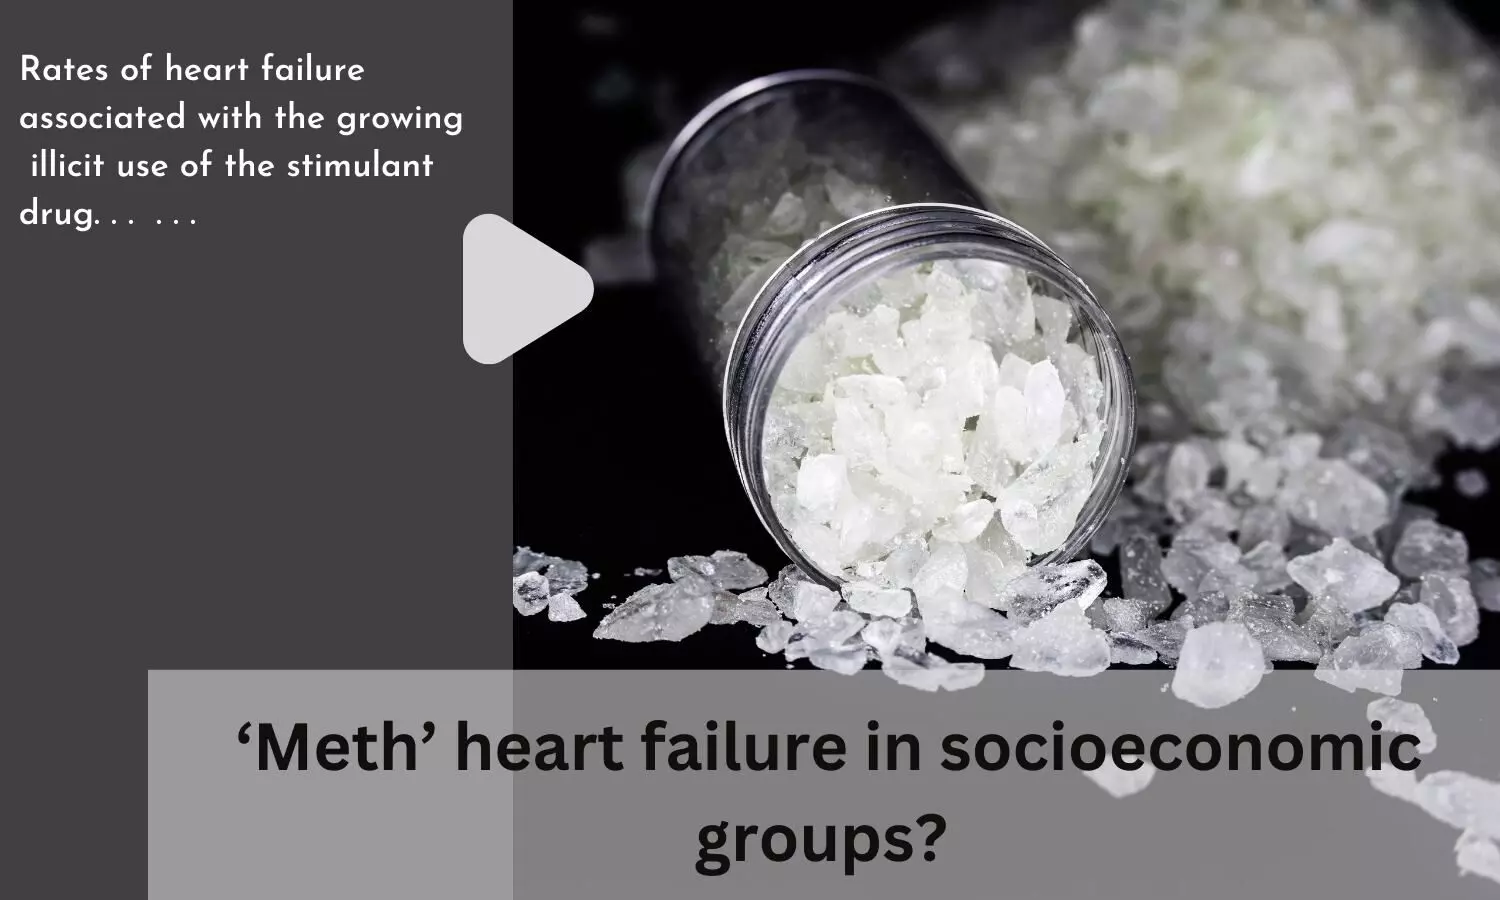 Meth heart failure in socioeconomic groups?